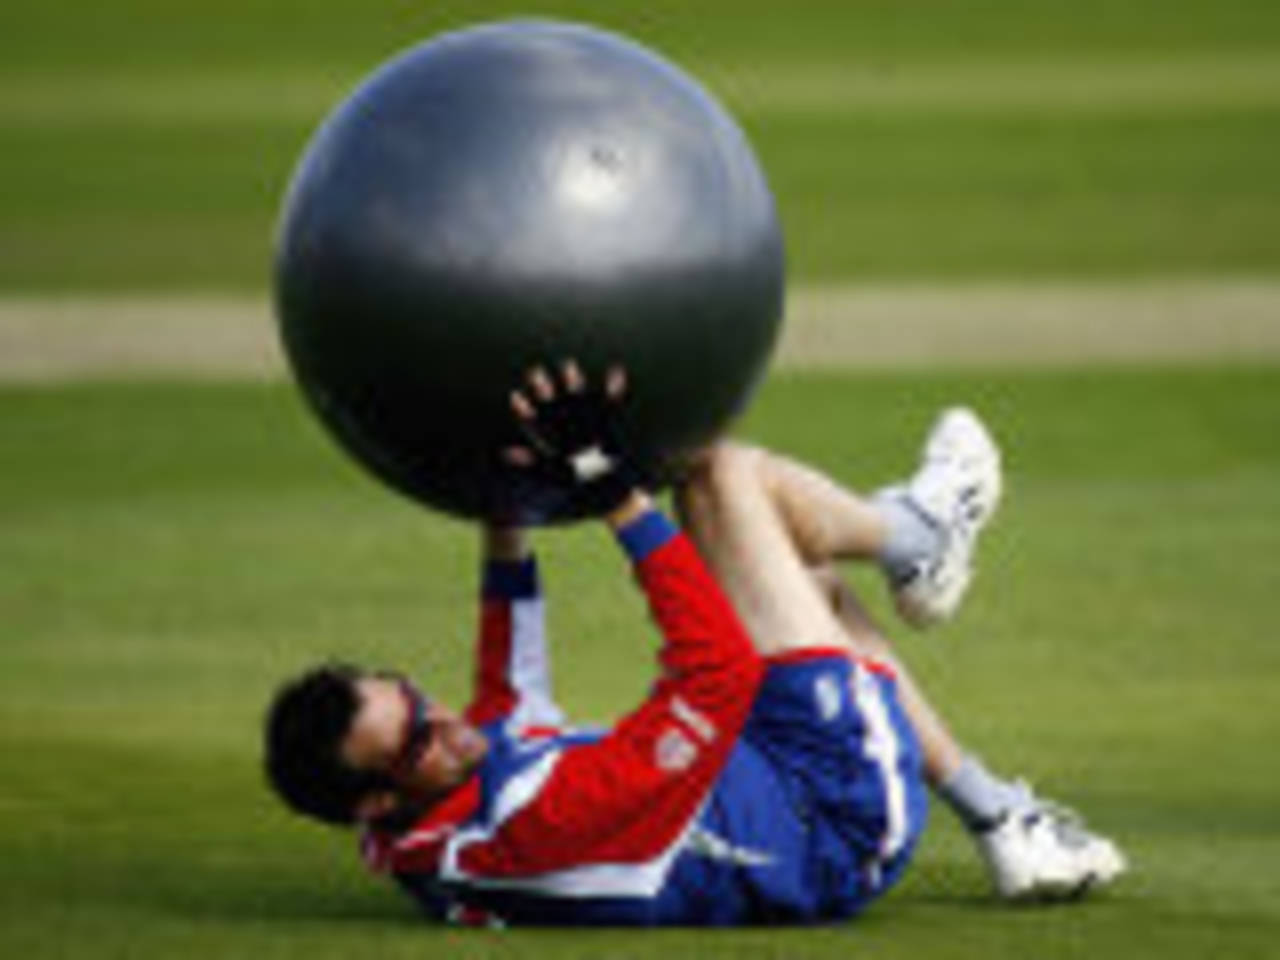 Marcus Trescothick catches cannonballs, England training session, Trent Bridge, May 31, 2006